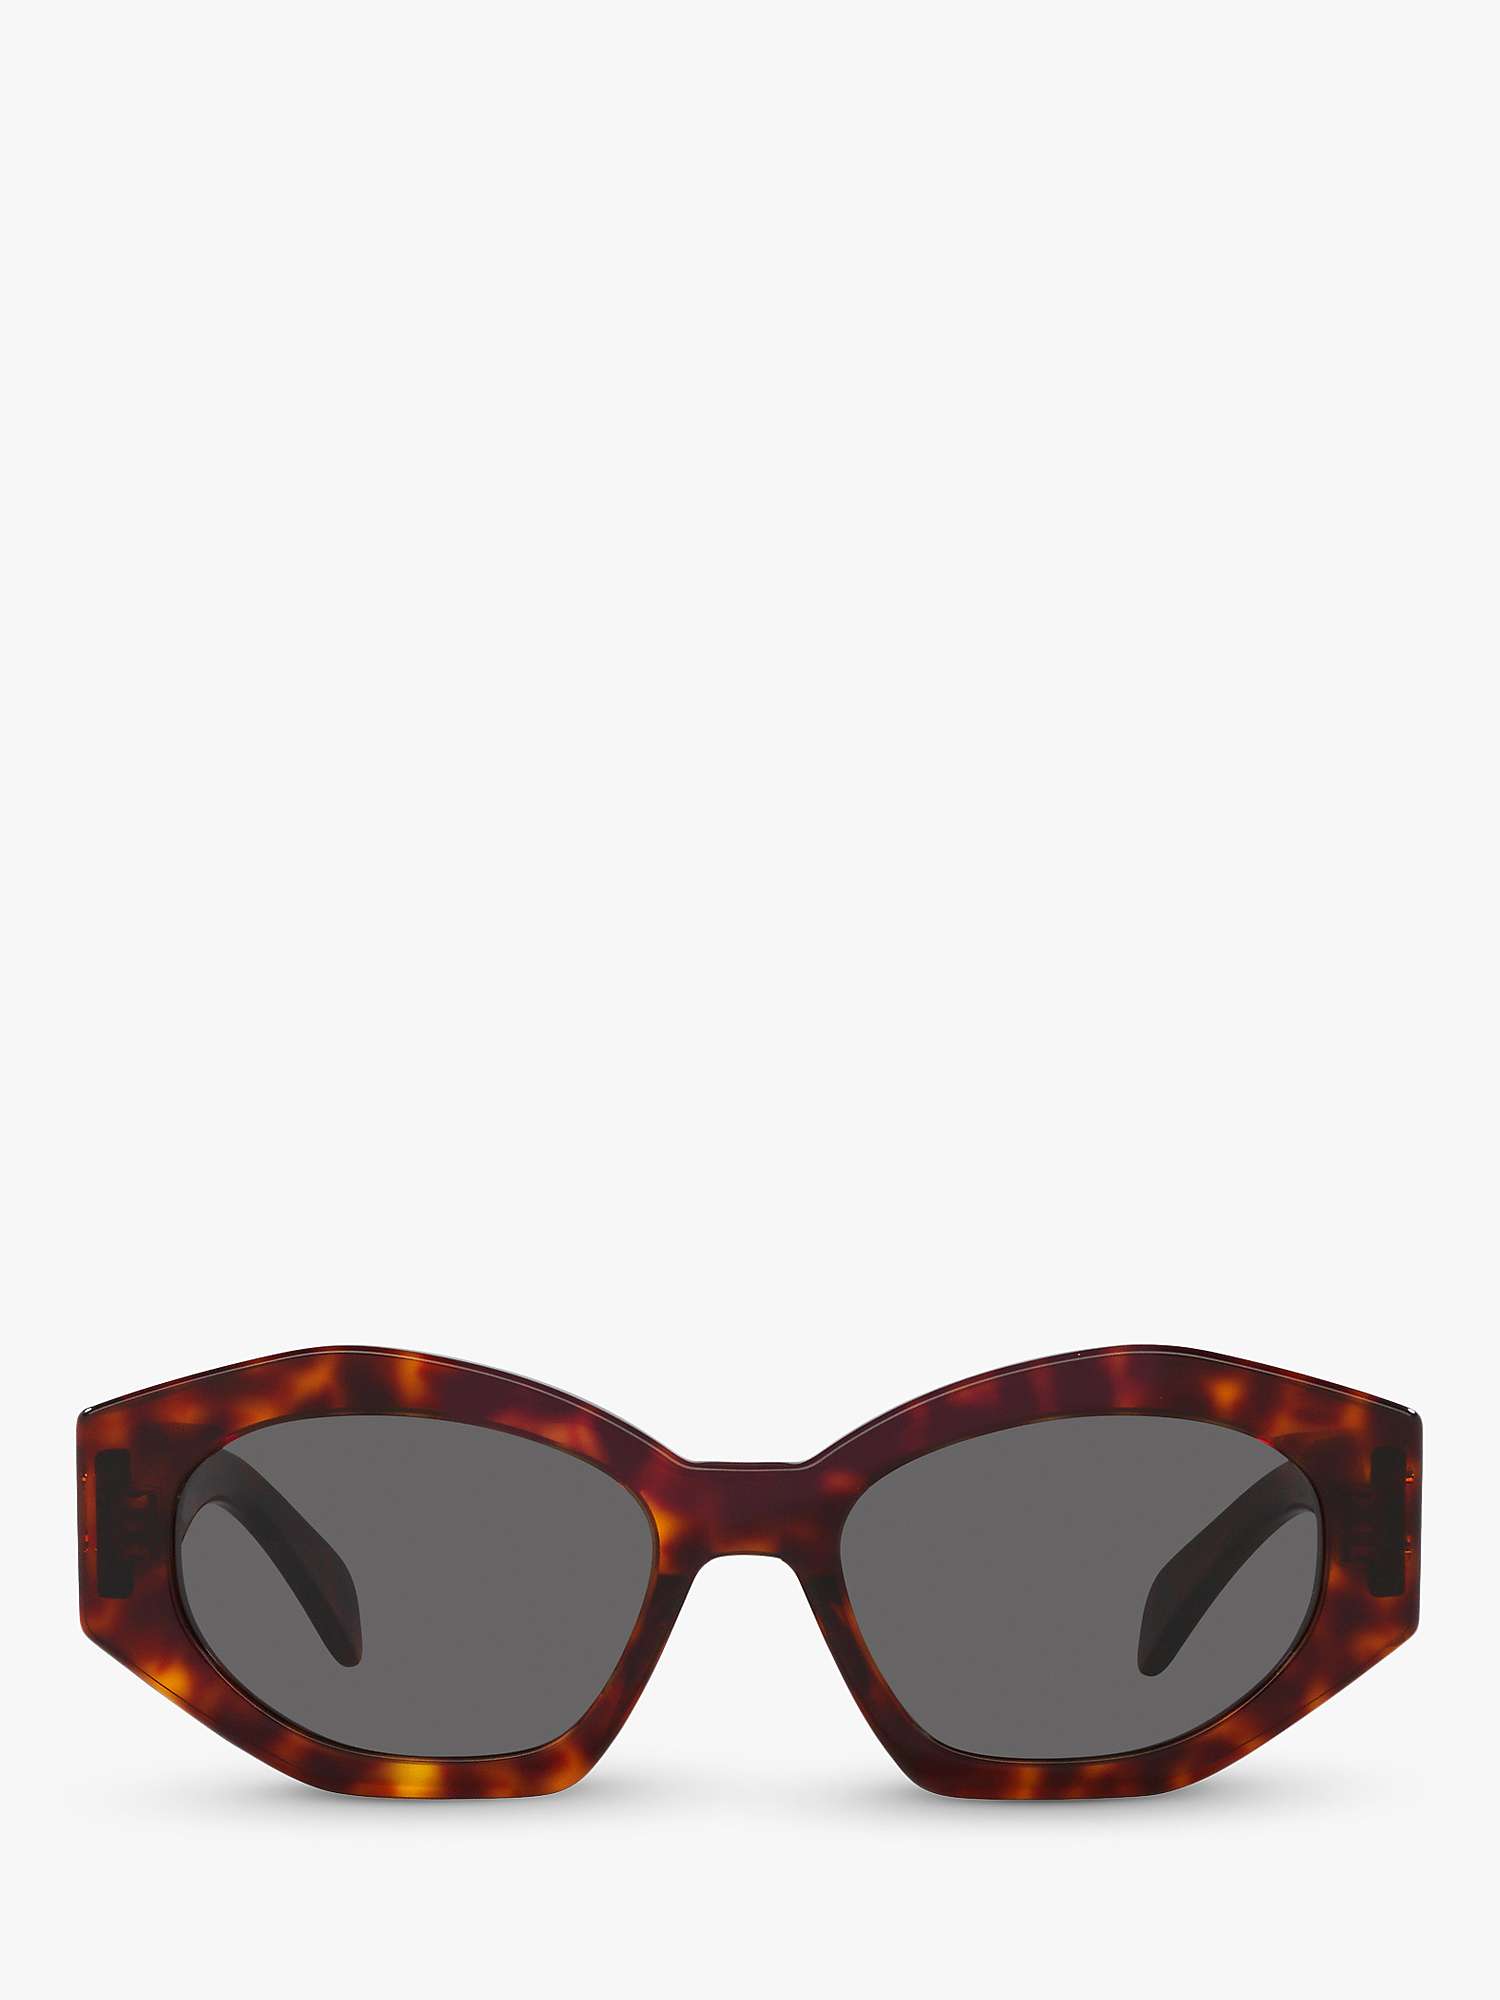 Buy Celine CL000380 Women's Oval Sunglasses, Tortoise Yellow Online at johnlewis.com